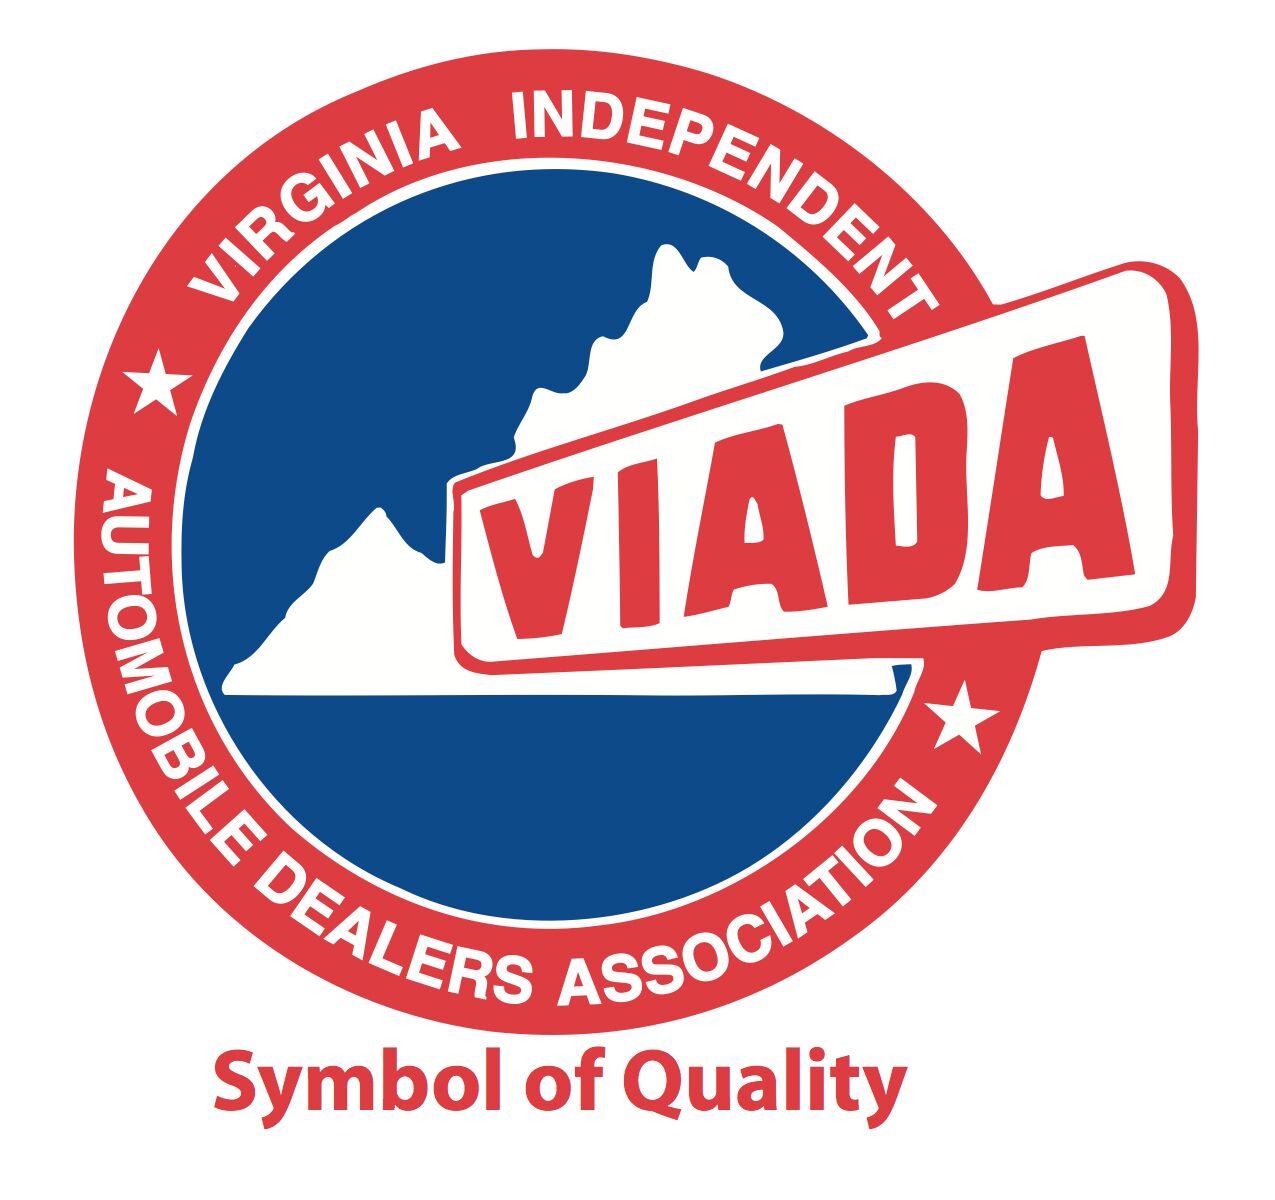 Virginia Car Dealership insurance coverage